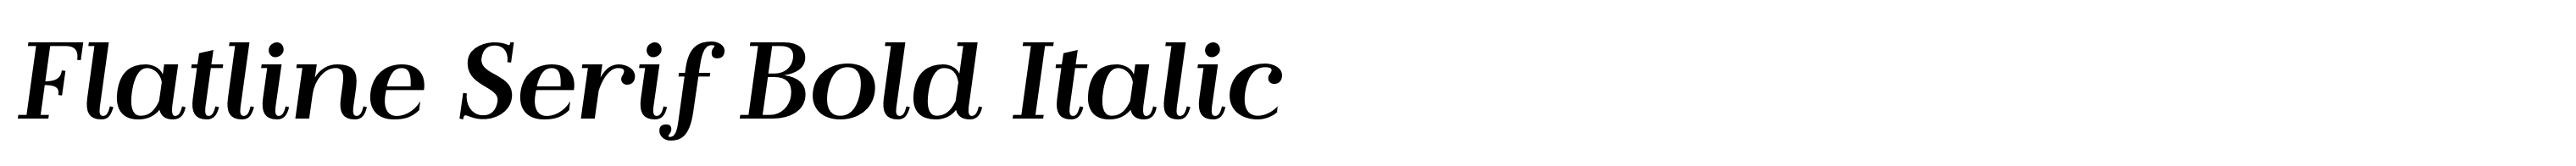 Flatline Serif Bold Italic